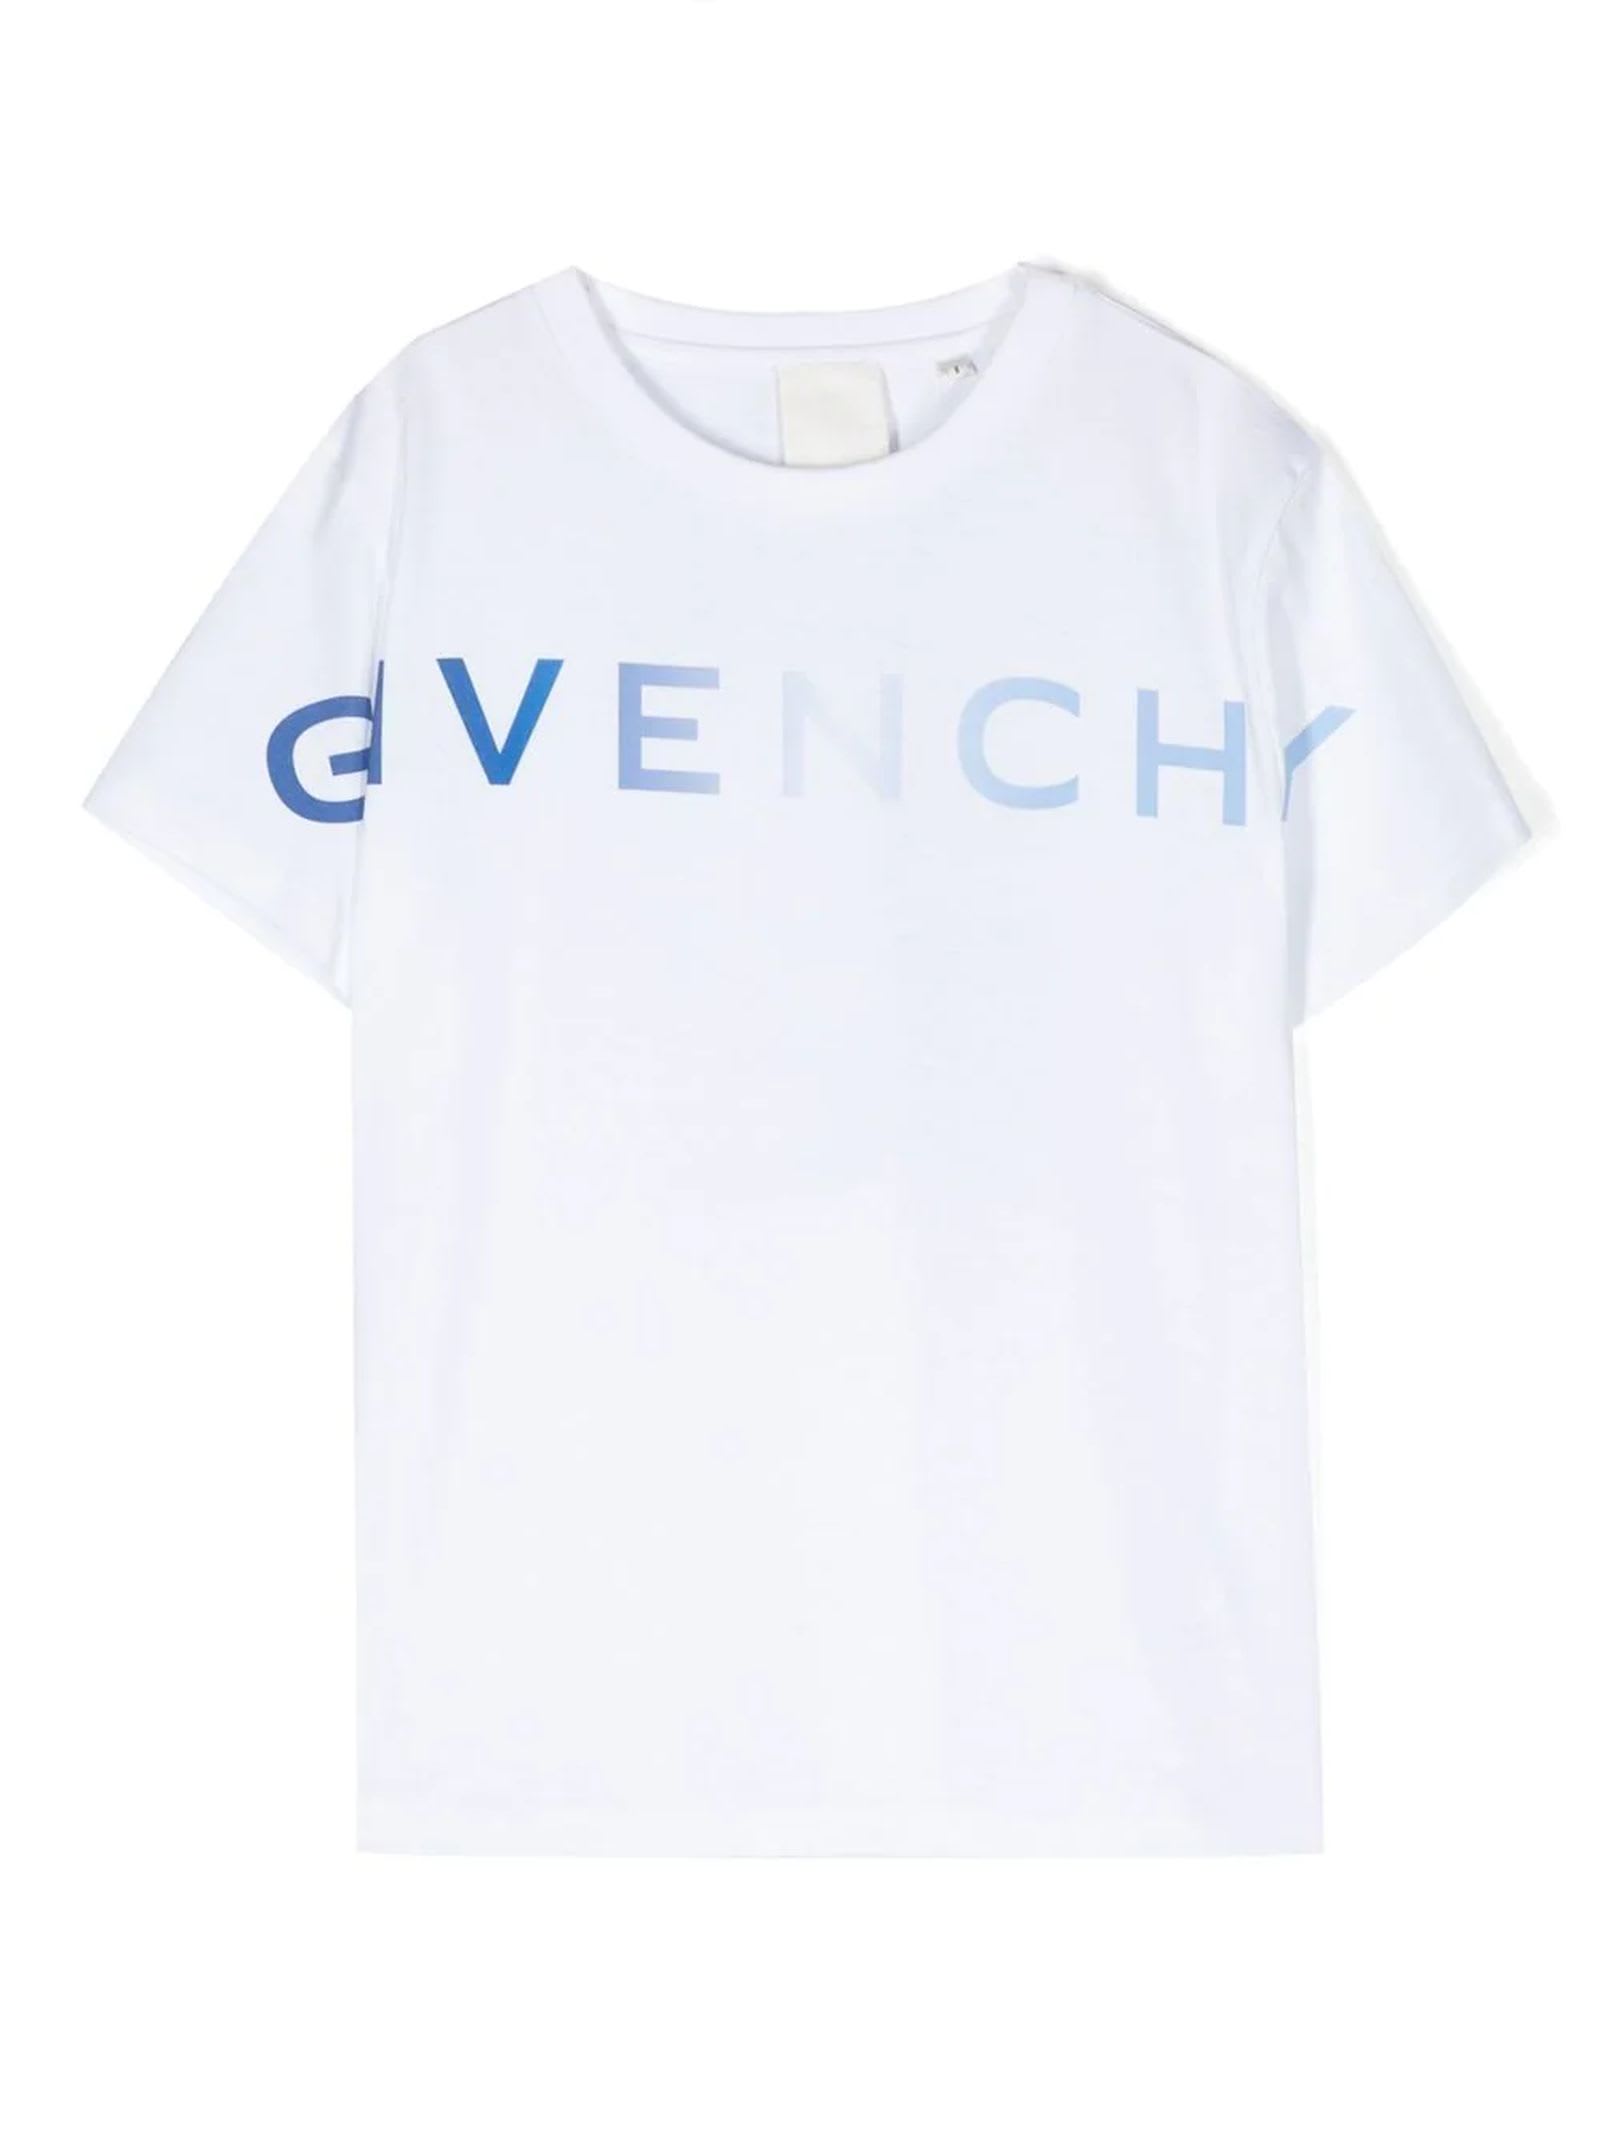 Givenchy White Cotton Tshirt